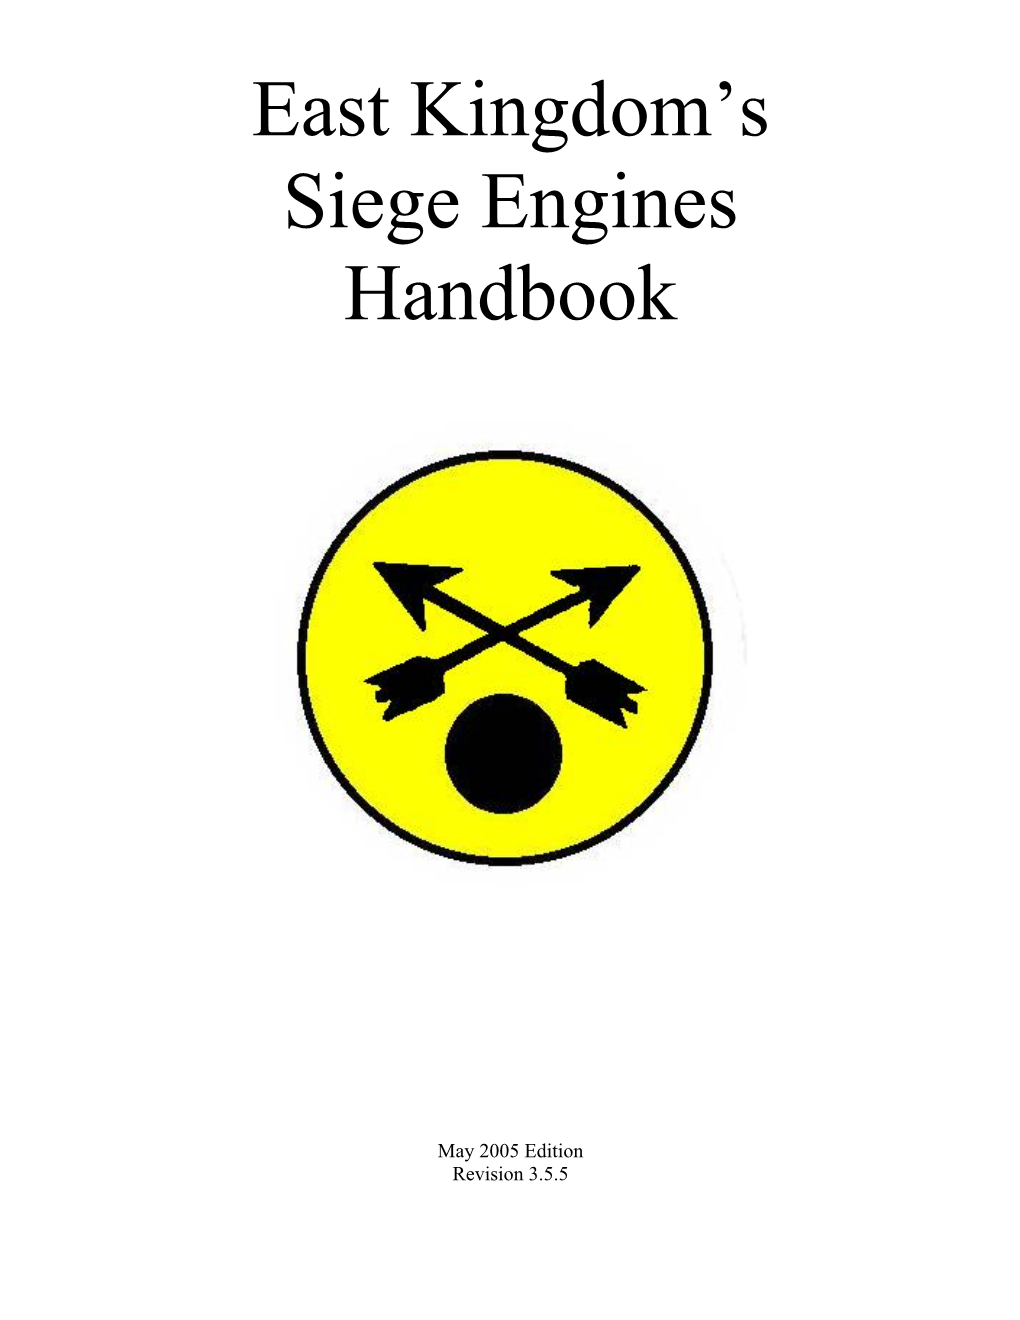 EK Siege Handbook